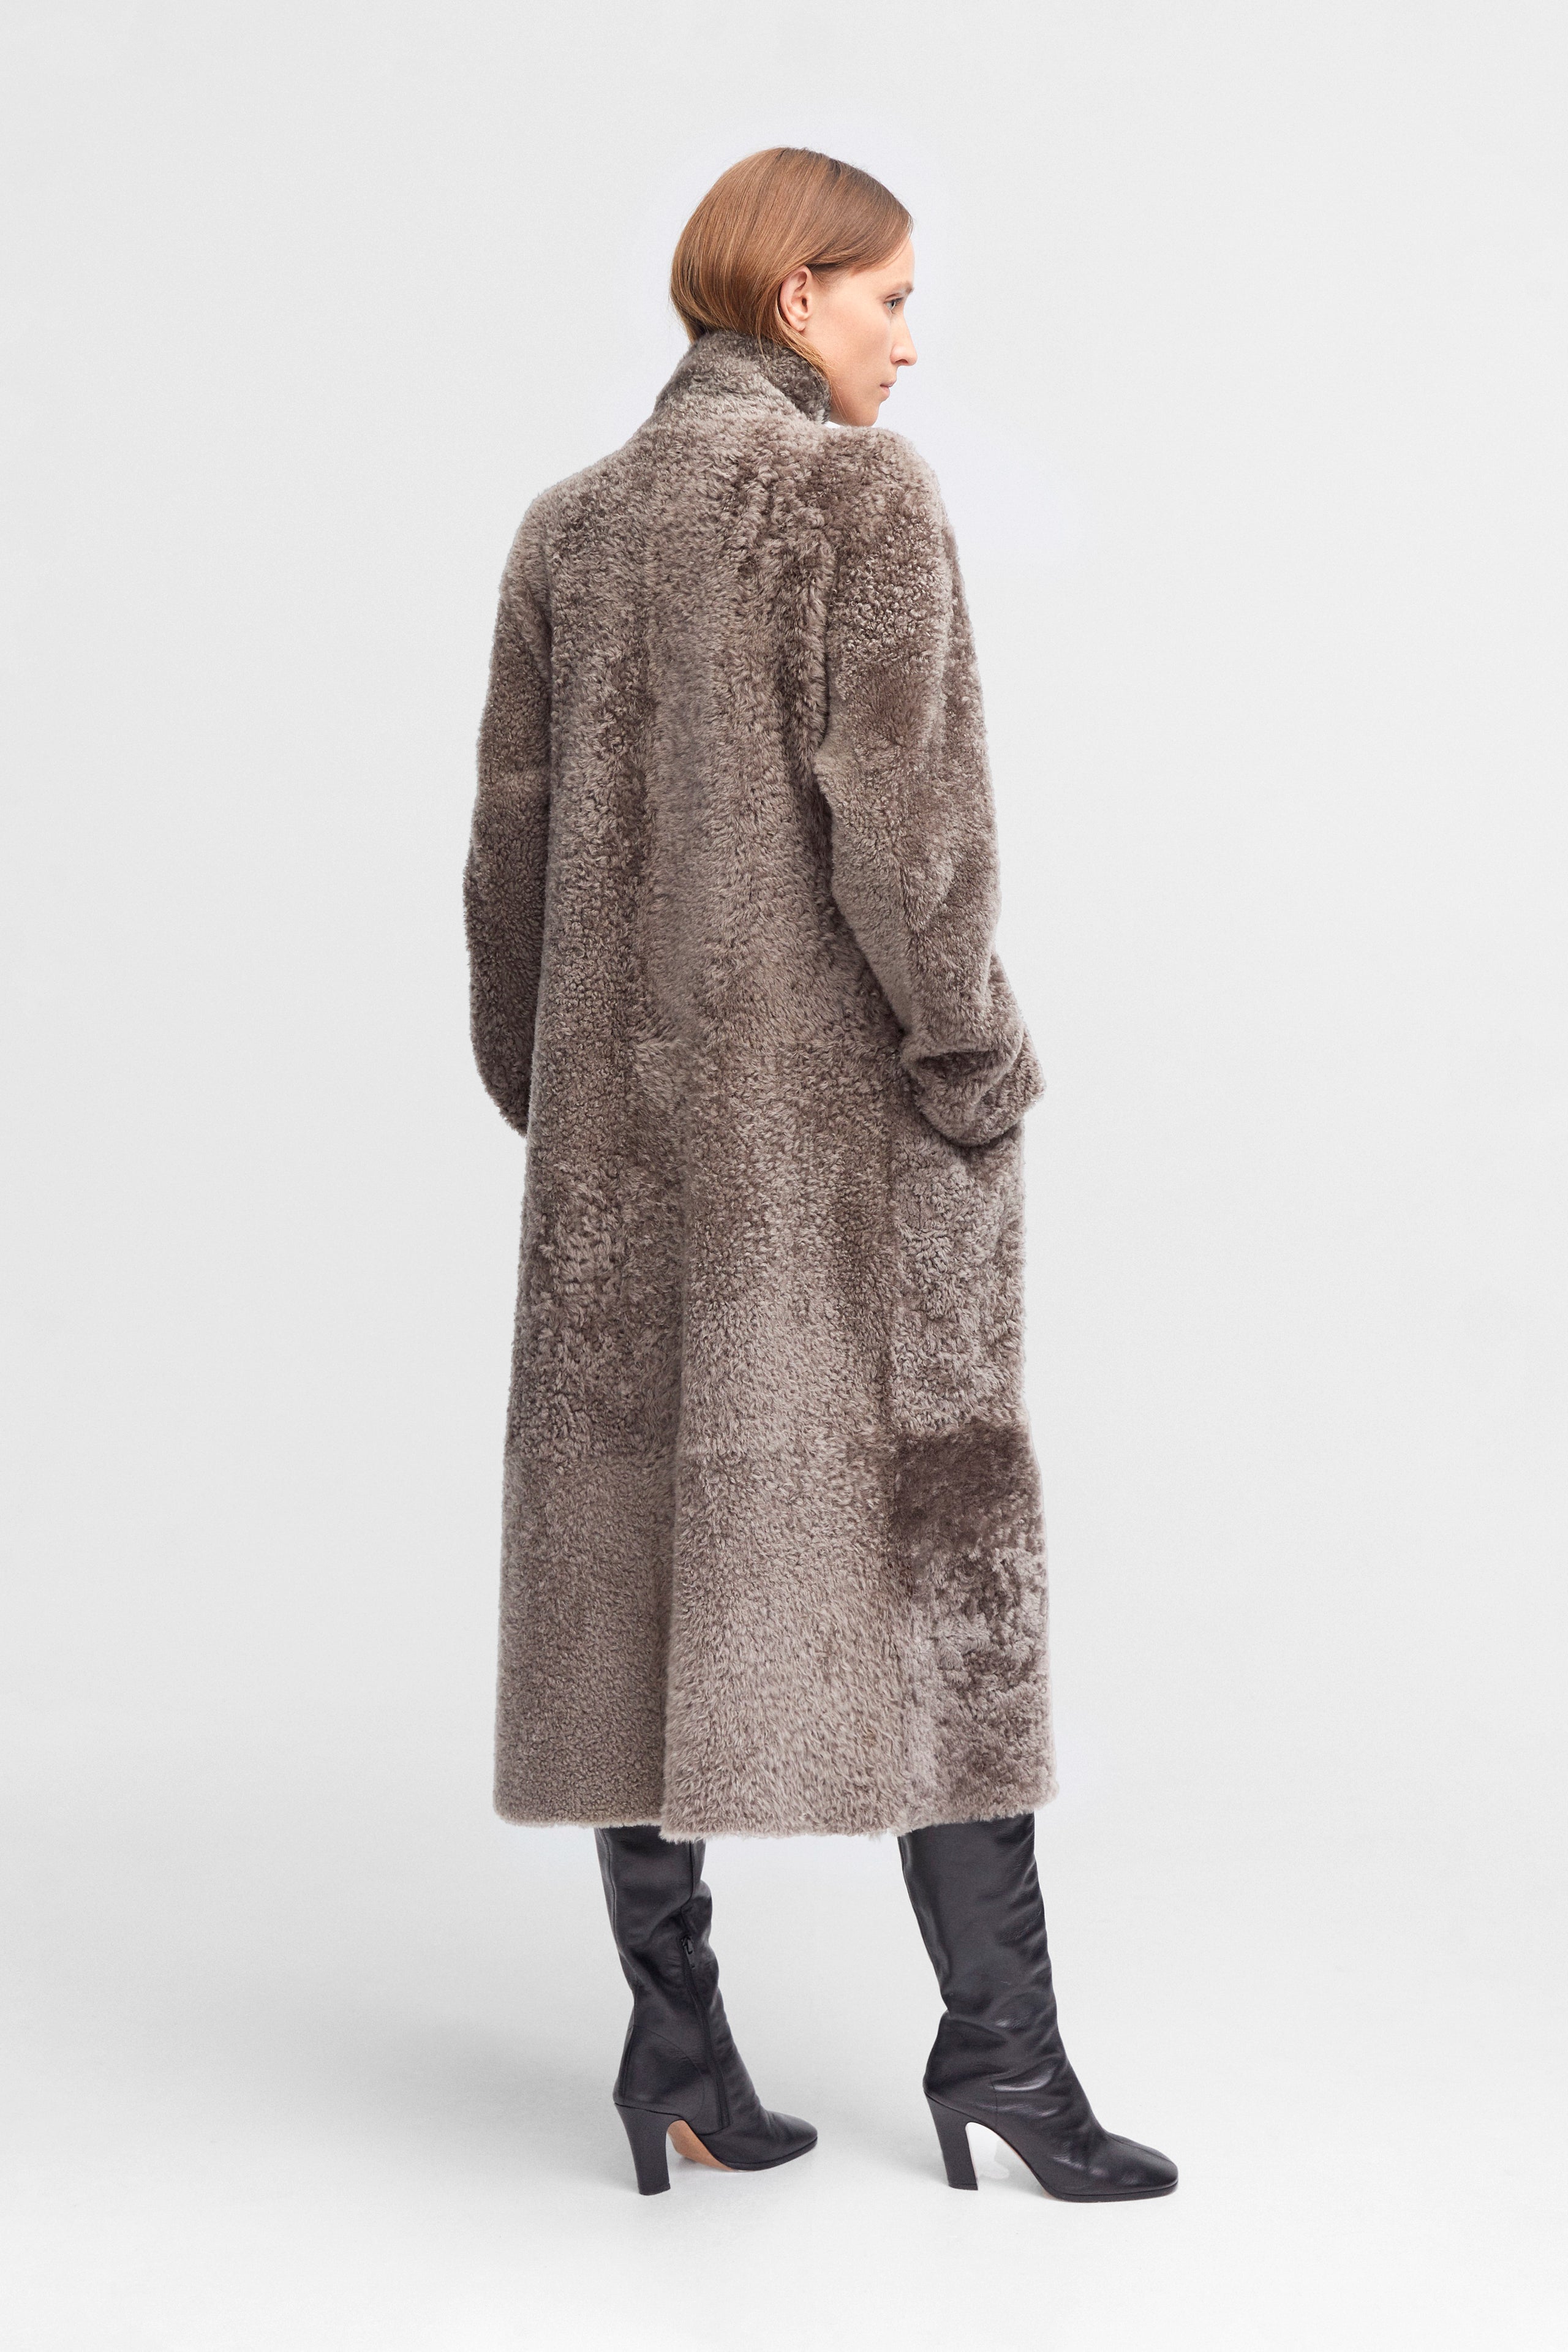 Model is wearing the Birthday Coat Iceland Grey Draped Shearling Coat Back